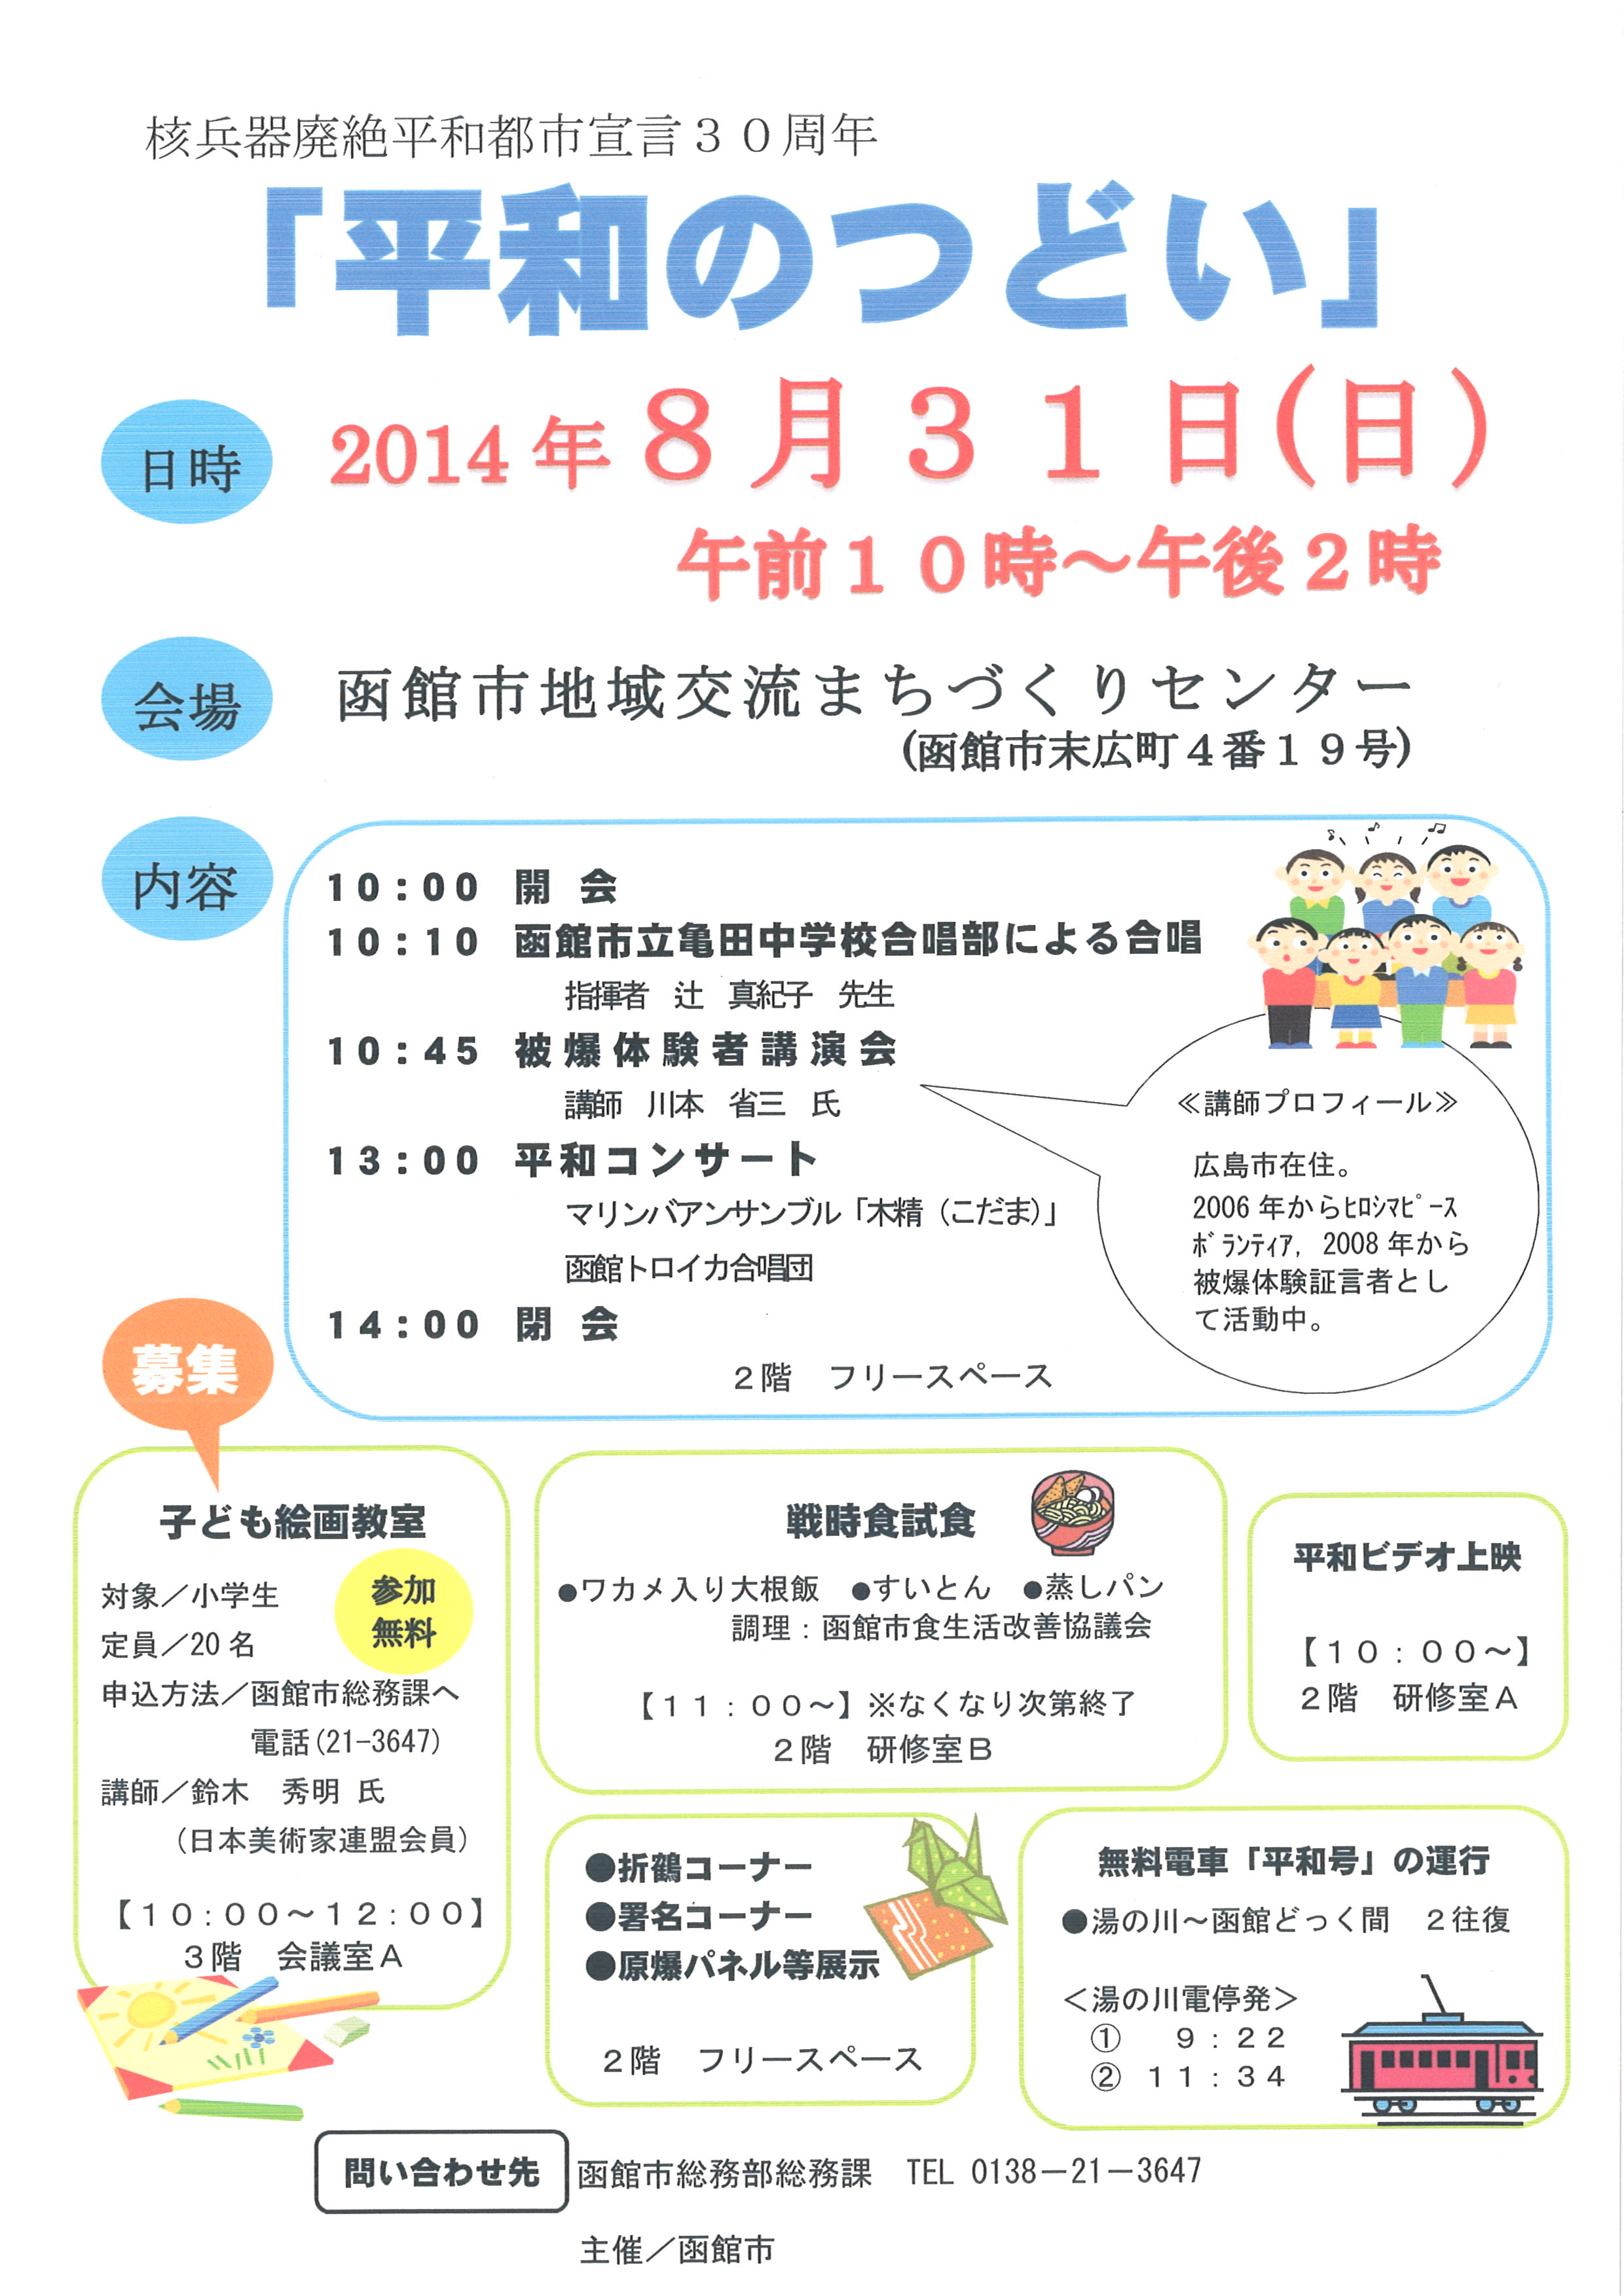 http://hakomachi.com/diary2/images/20140830115414_00001.jpg